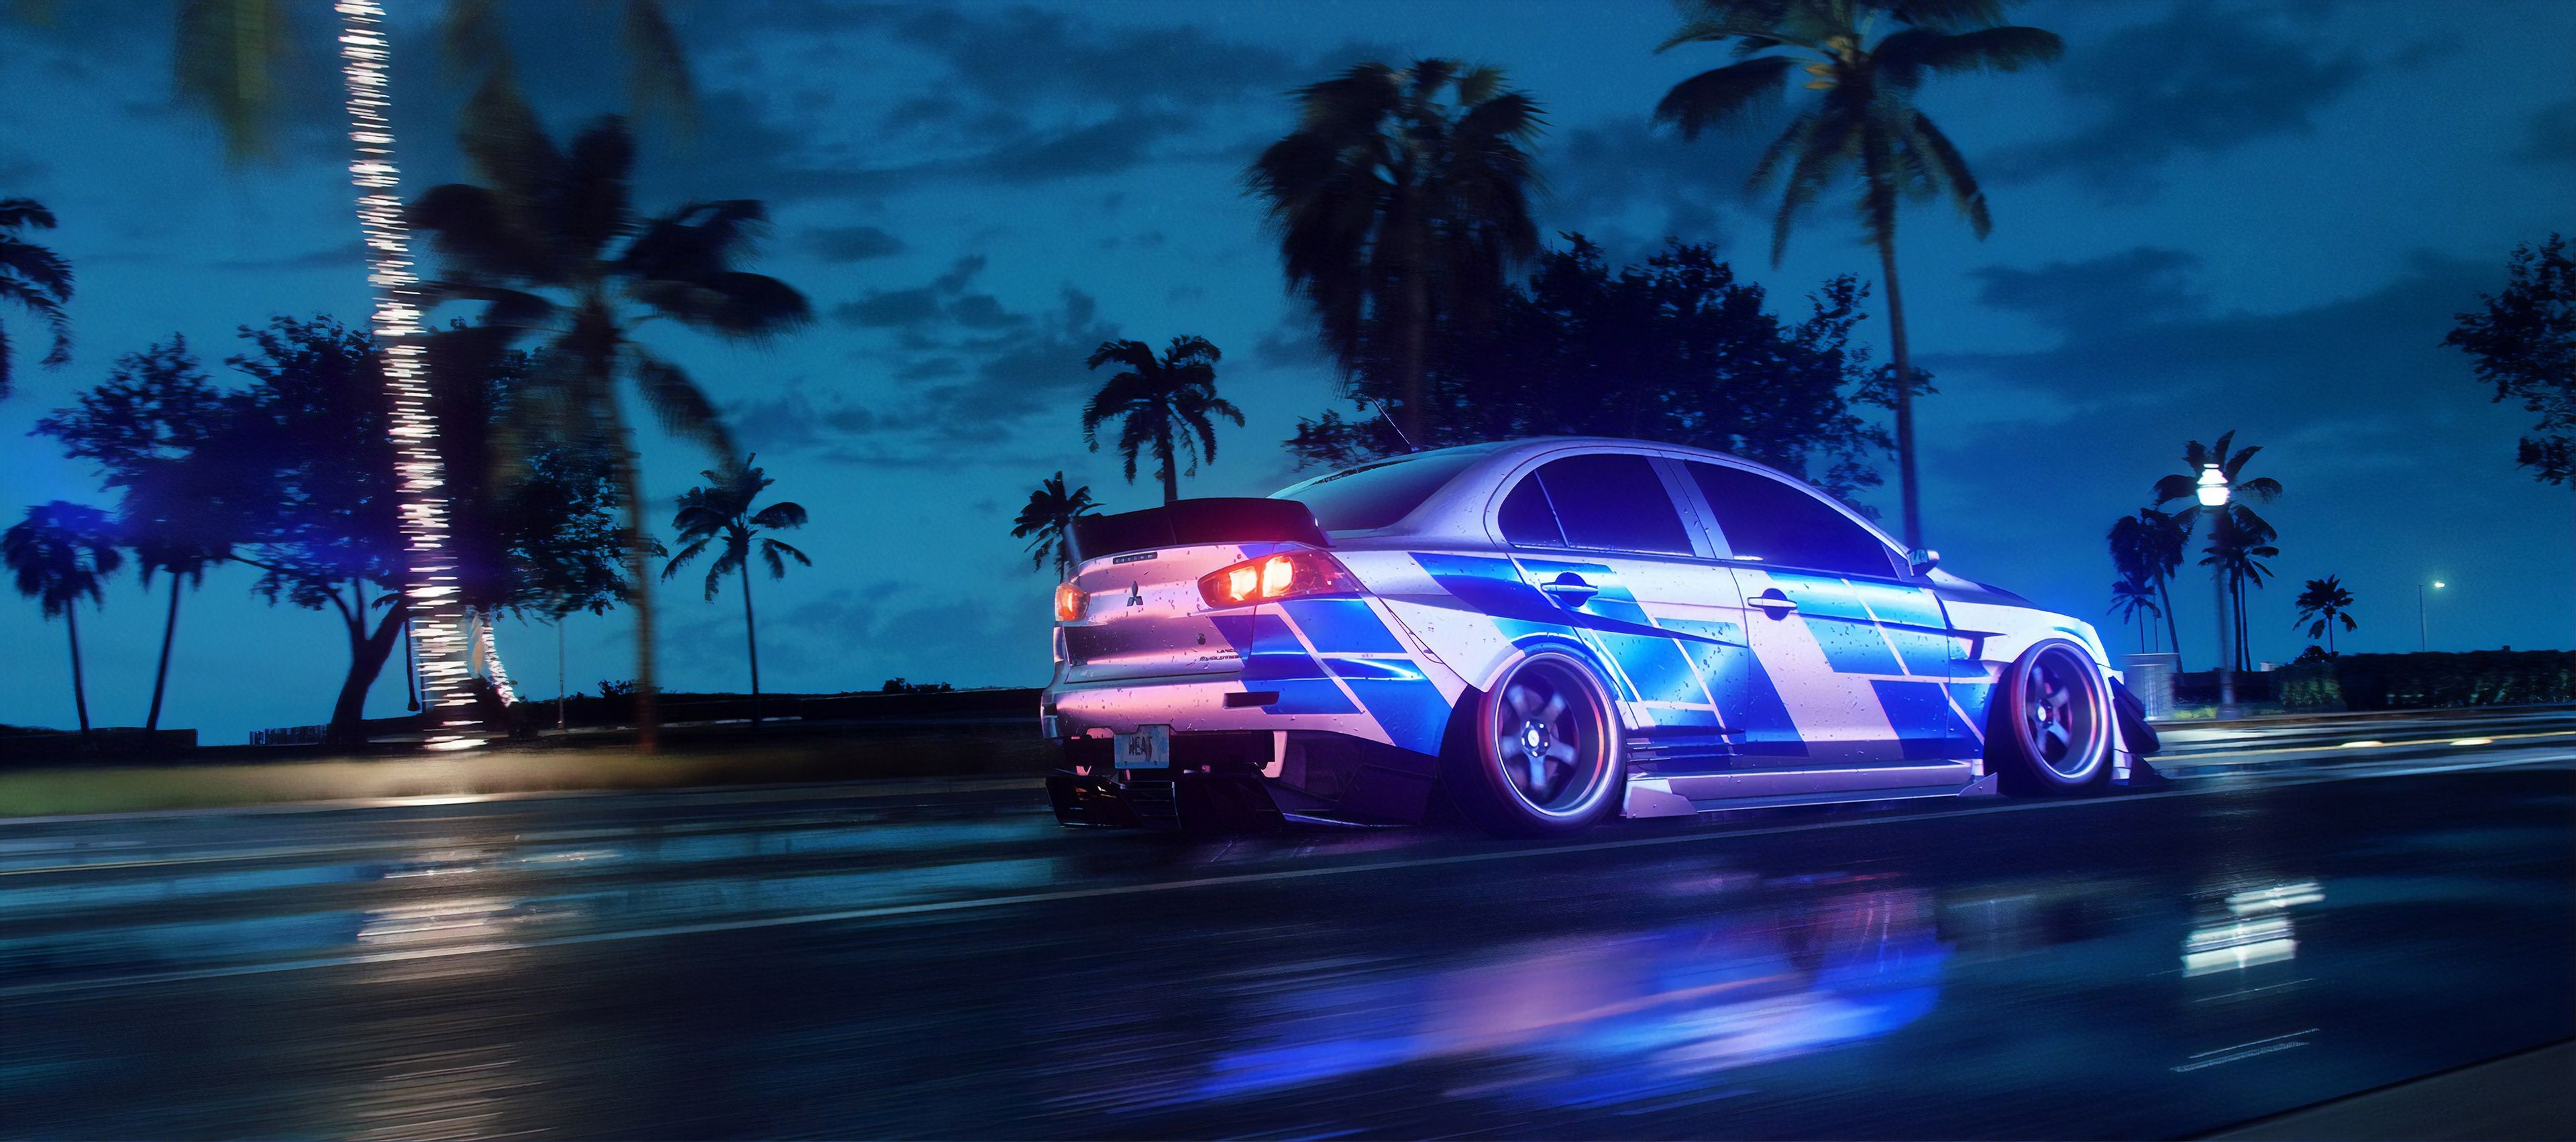 Mitsubishi Lancer Evolution Nfs Electronic Arts Need For Speed 2019 4k